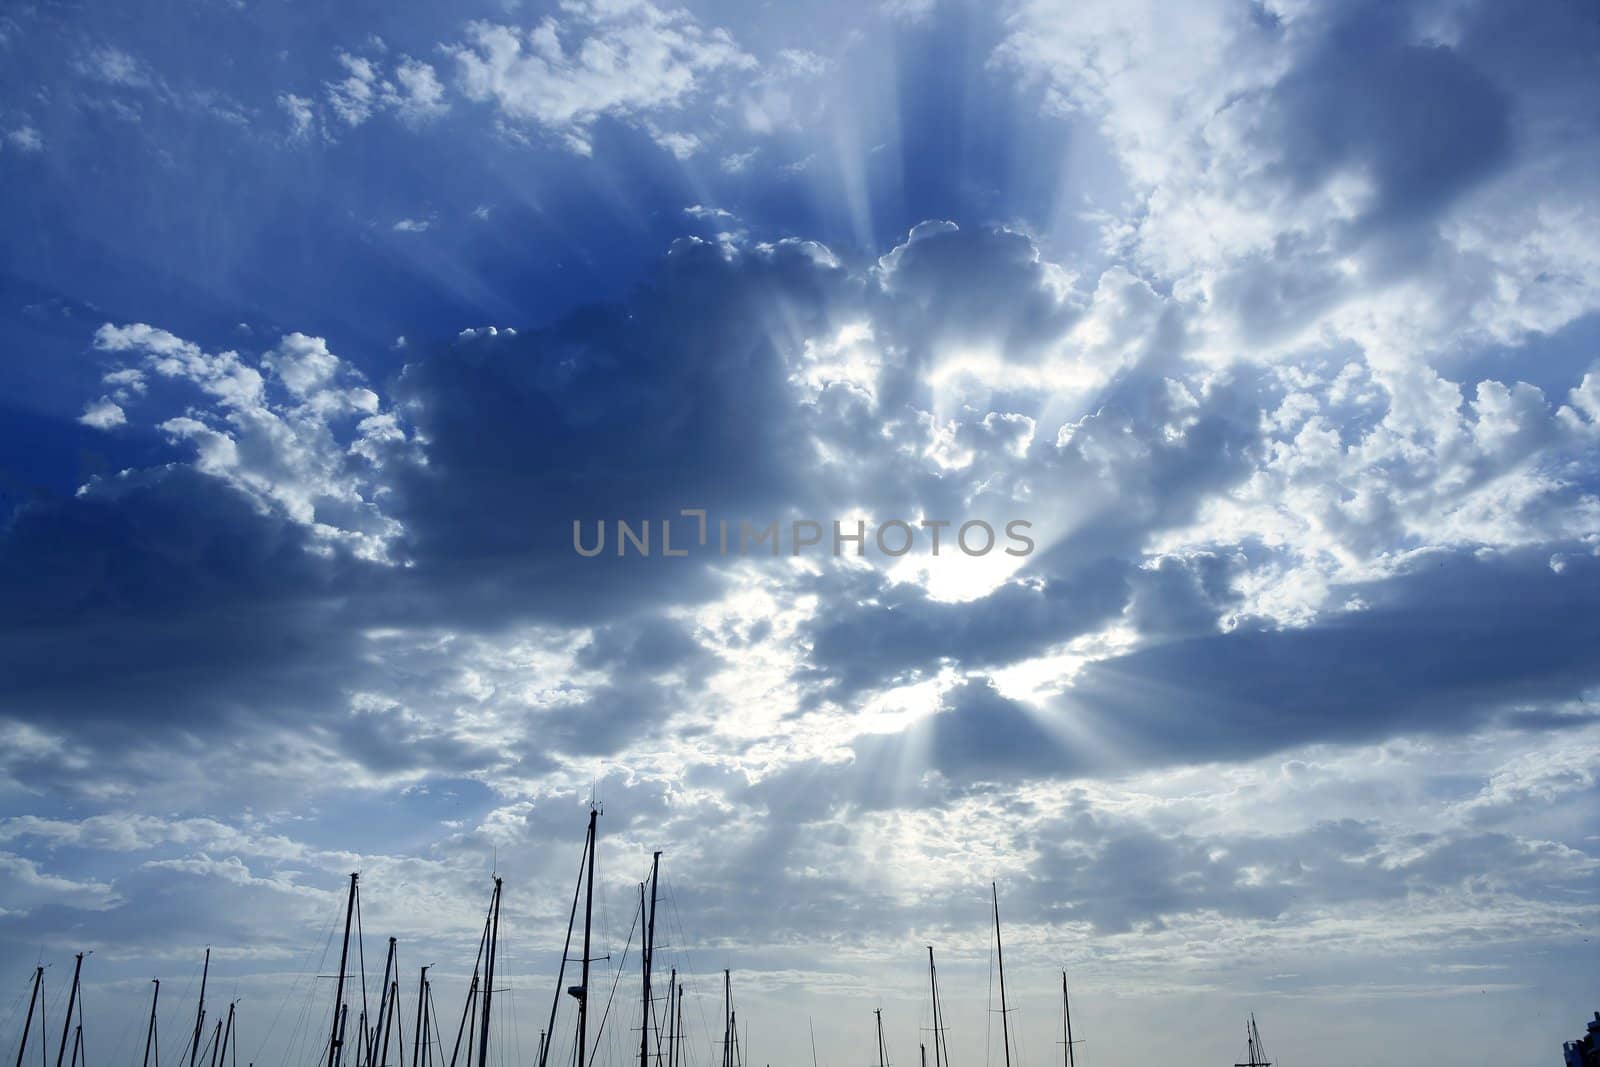 Cloudy sunset sky with sailboat mast by lunamarina